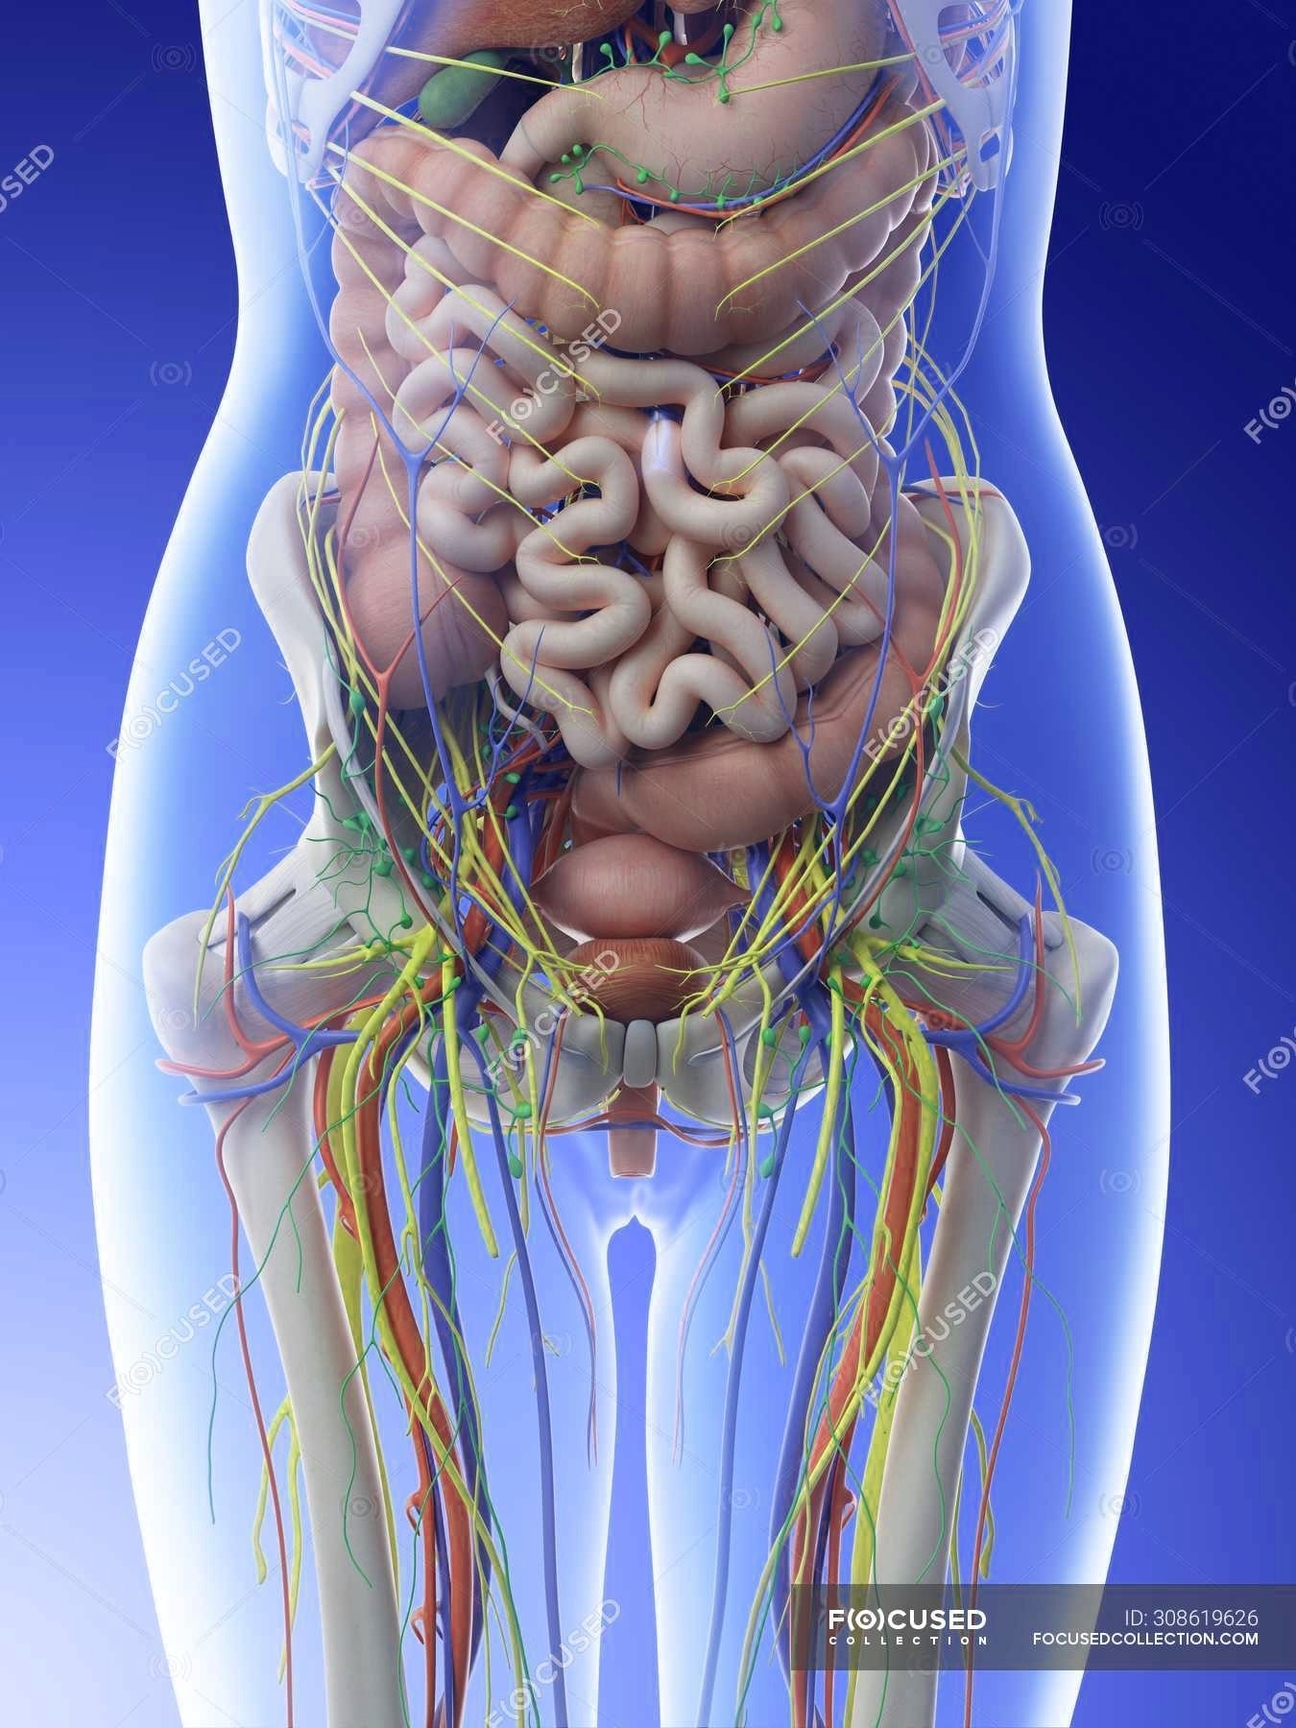 Female Abdominal Anatomy And Internal Organs